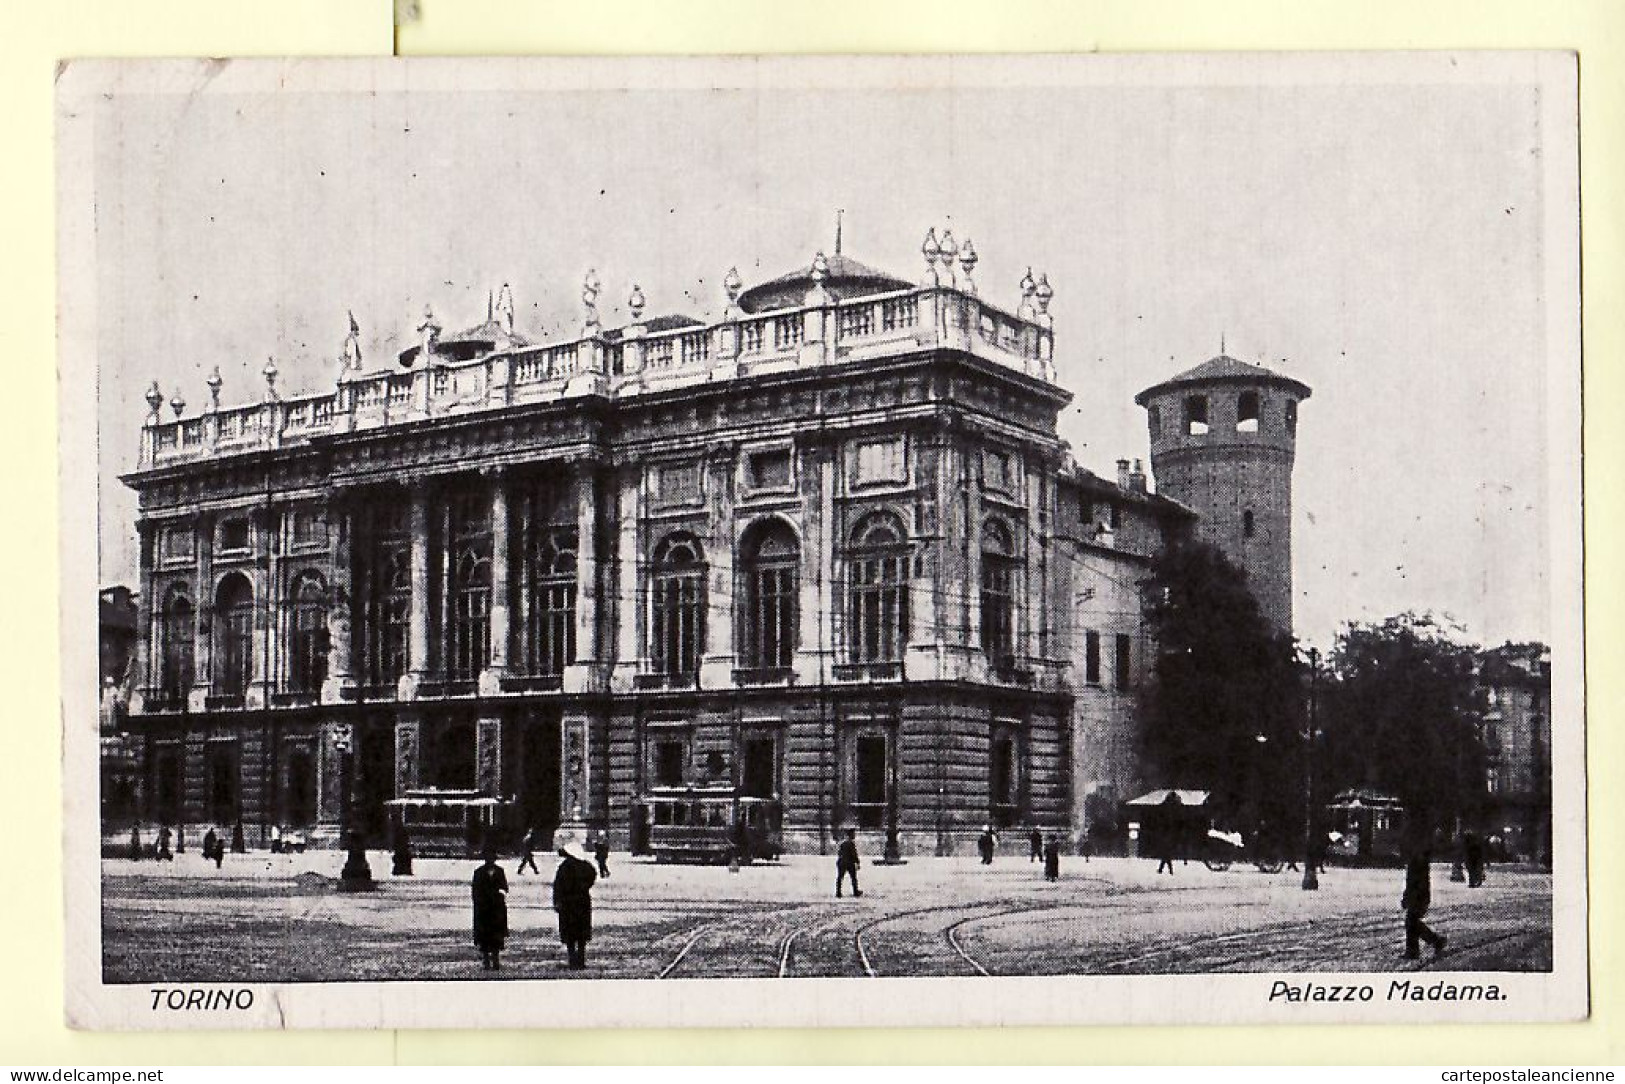 26836 / ⭐ Piemonte TORINO Turin PALAZZO MADAMA Circulato 29.12.1932 à GAUDUCHEAU Paris - Andere Monumente & Gebäude